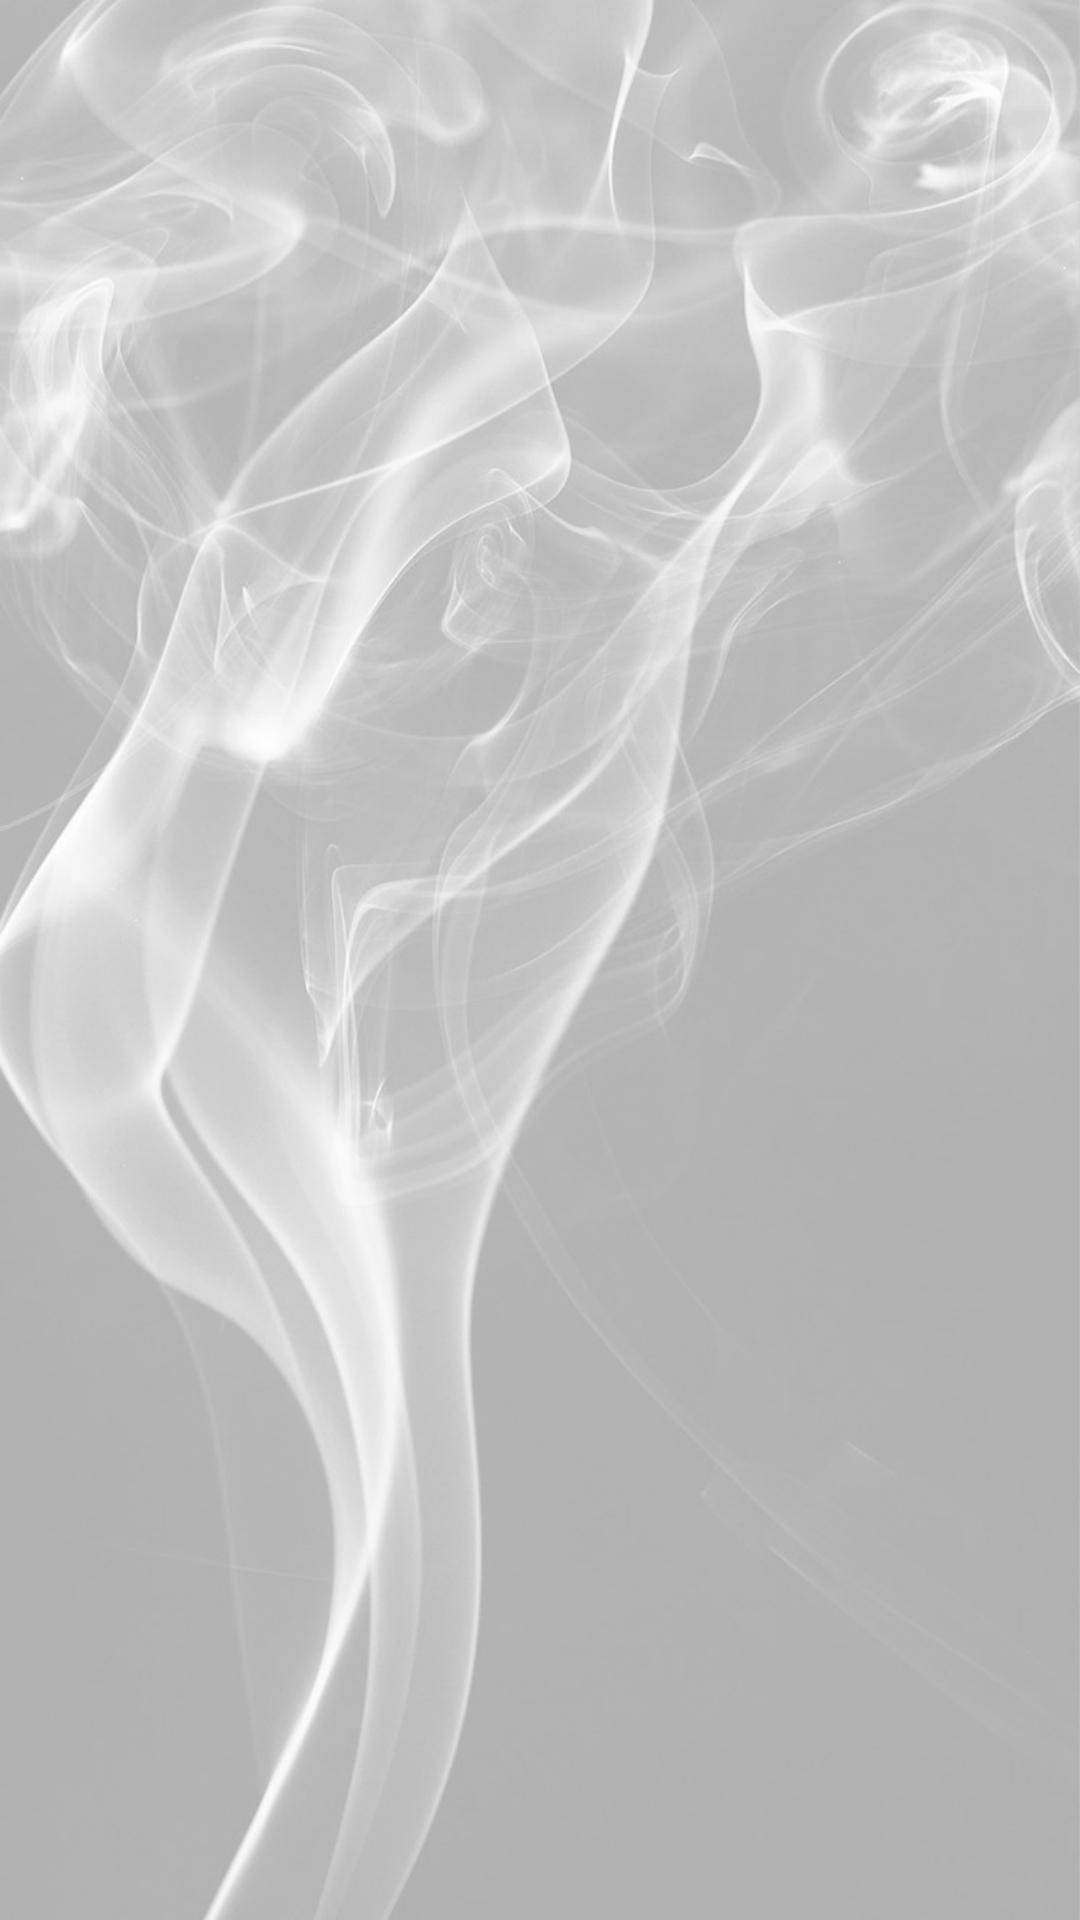 Download Smoke White Aesthetic Iphone Wallpaper 